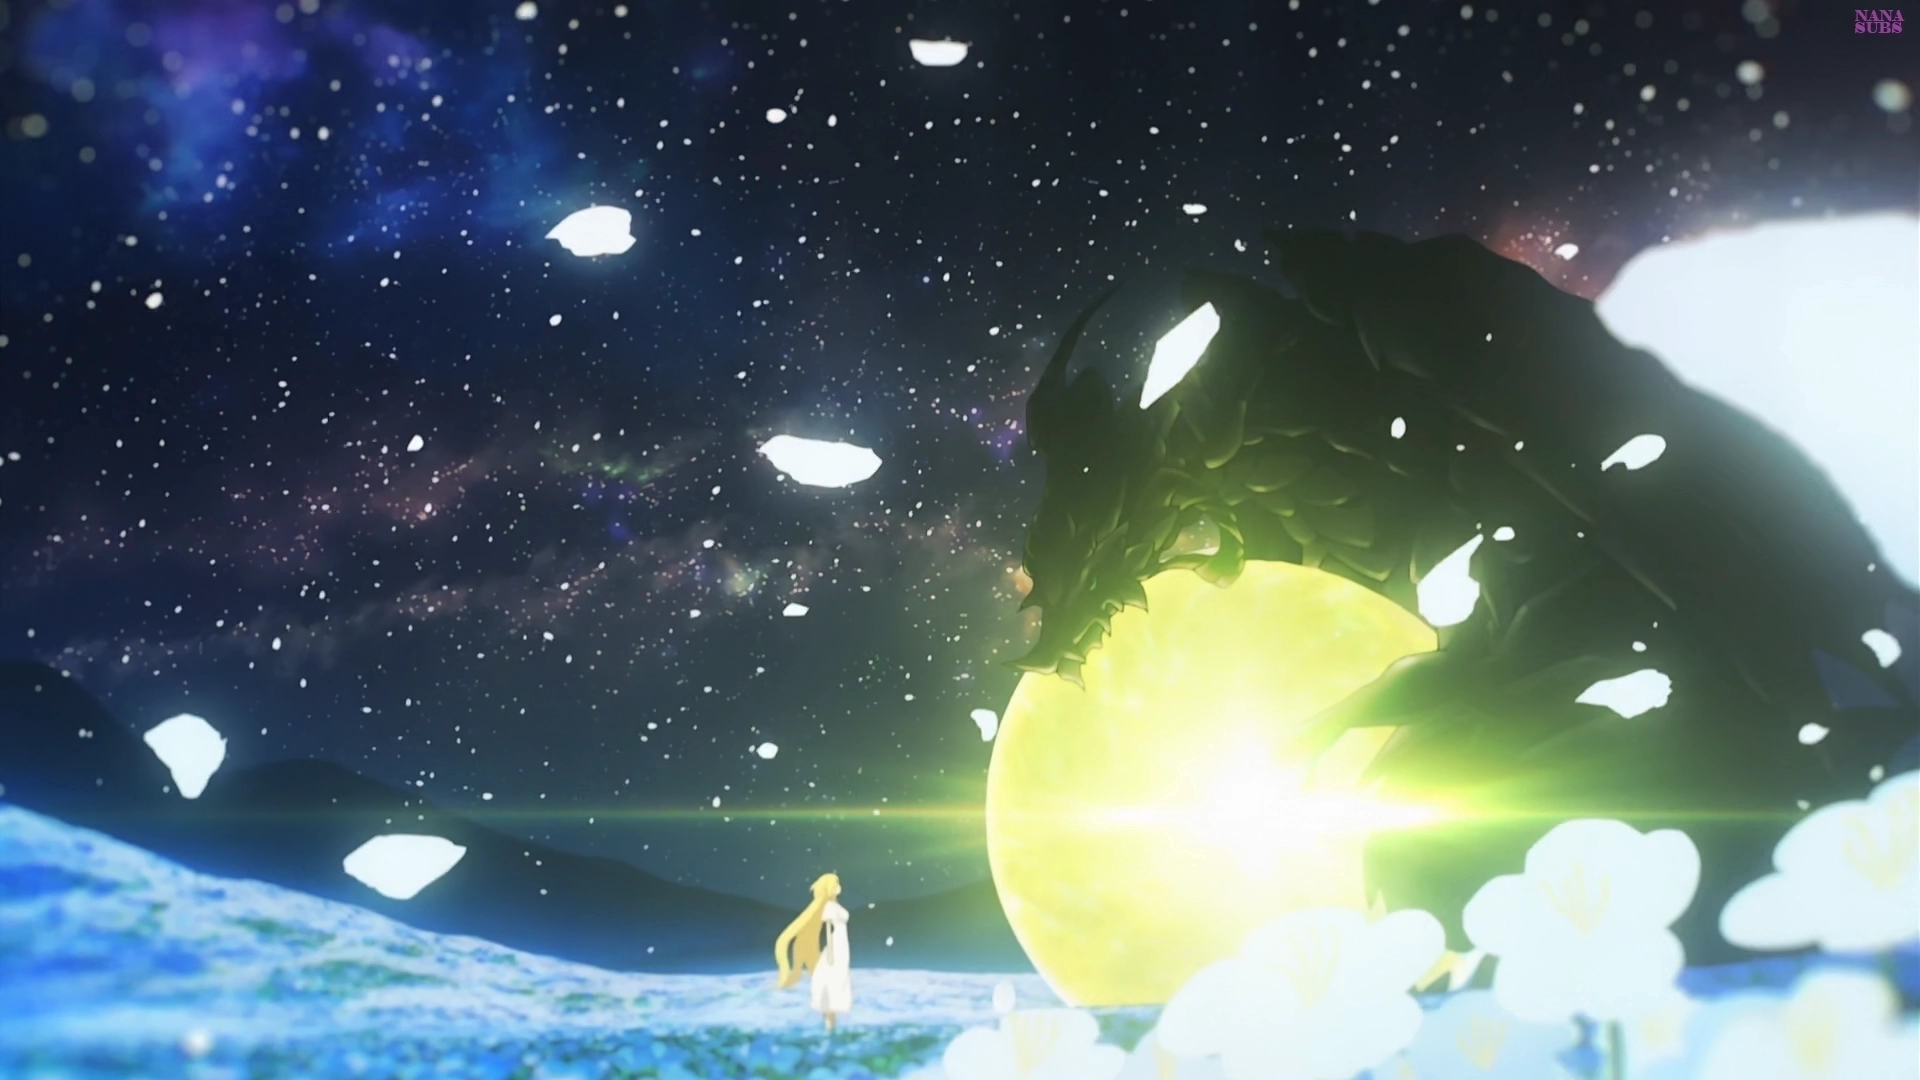 Minaturka 1 odcinka anime Fate/Apocrypha